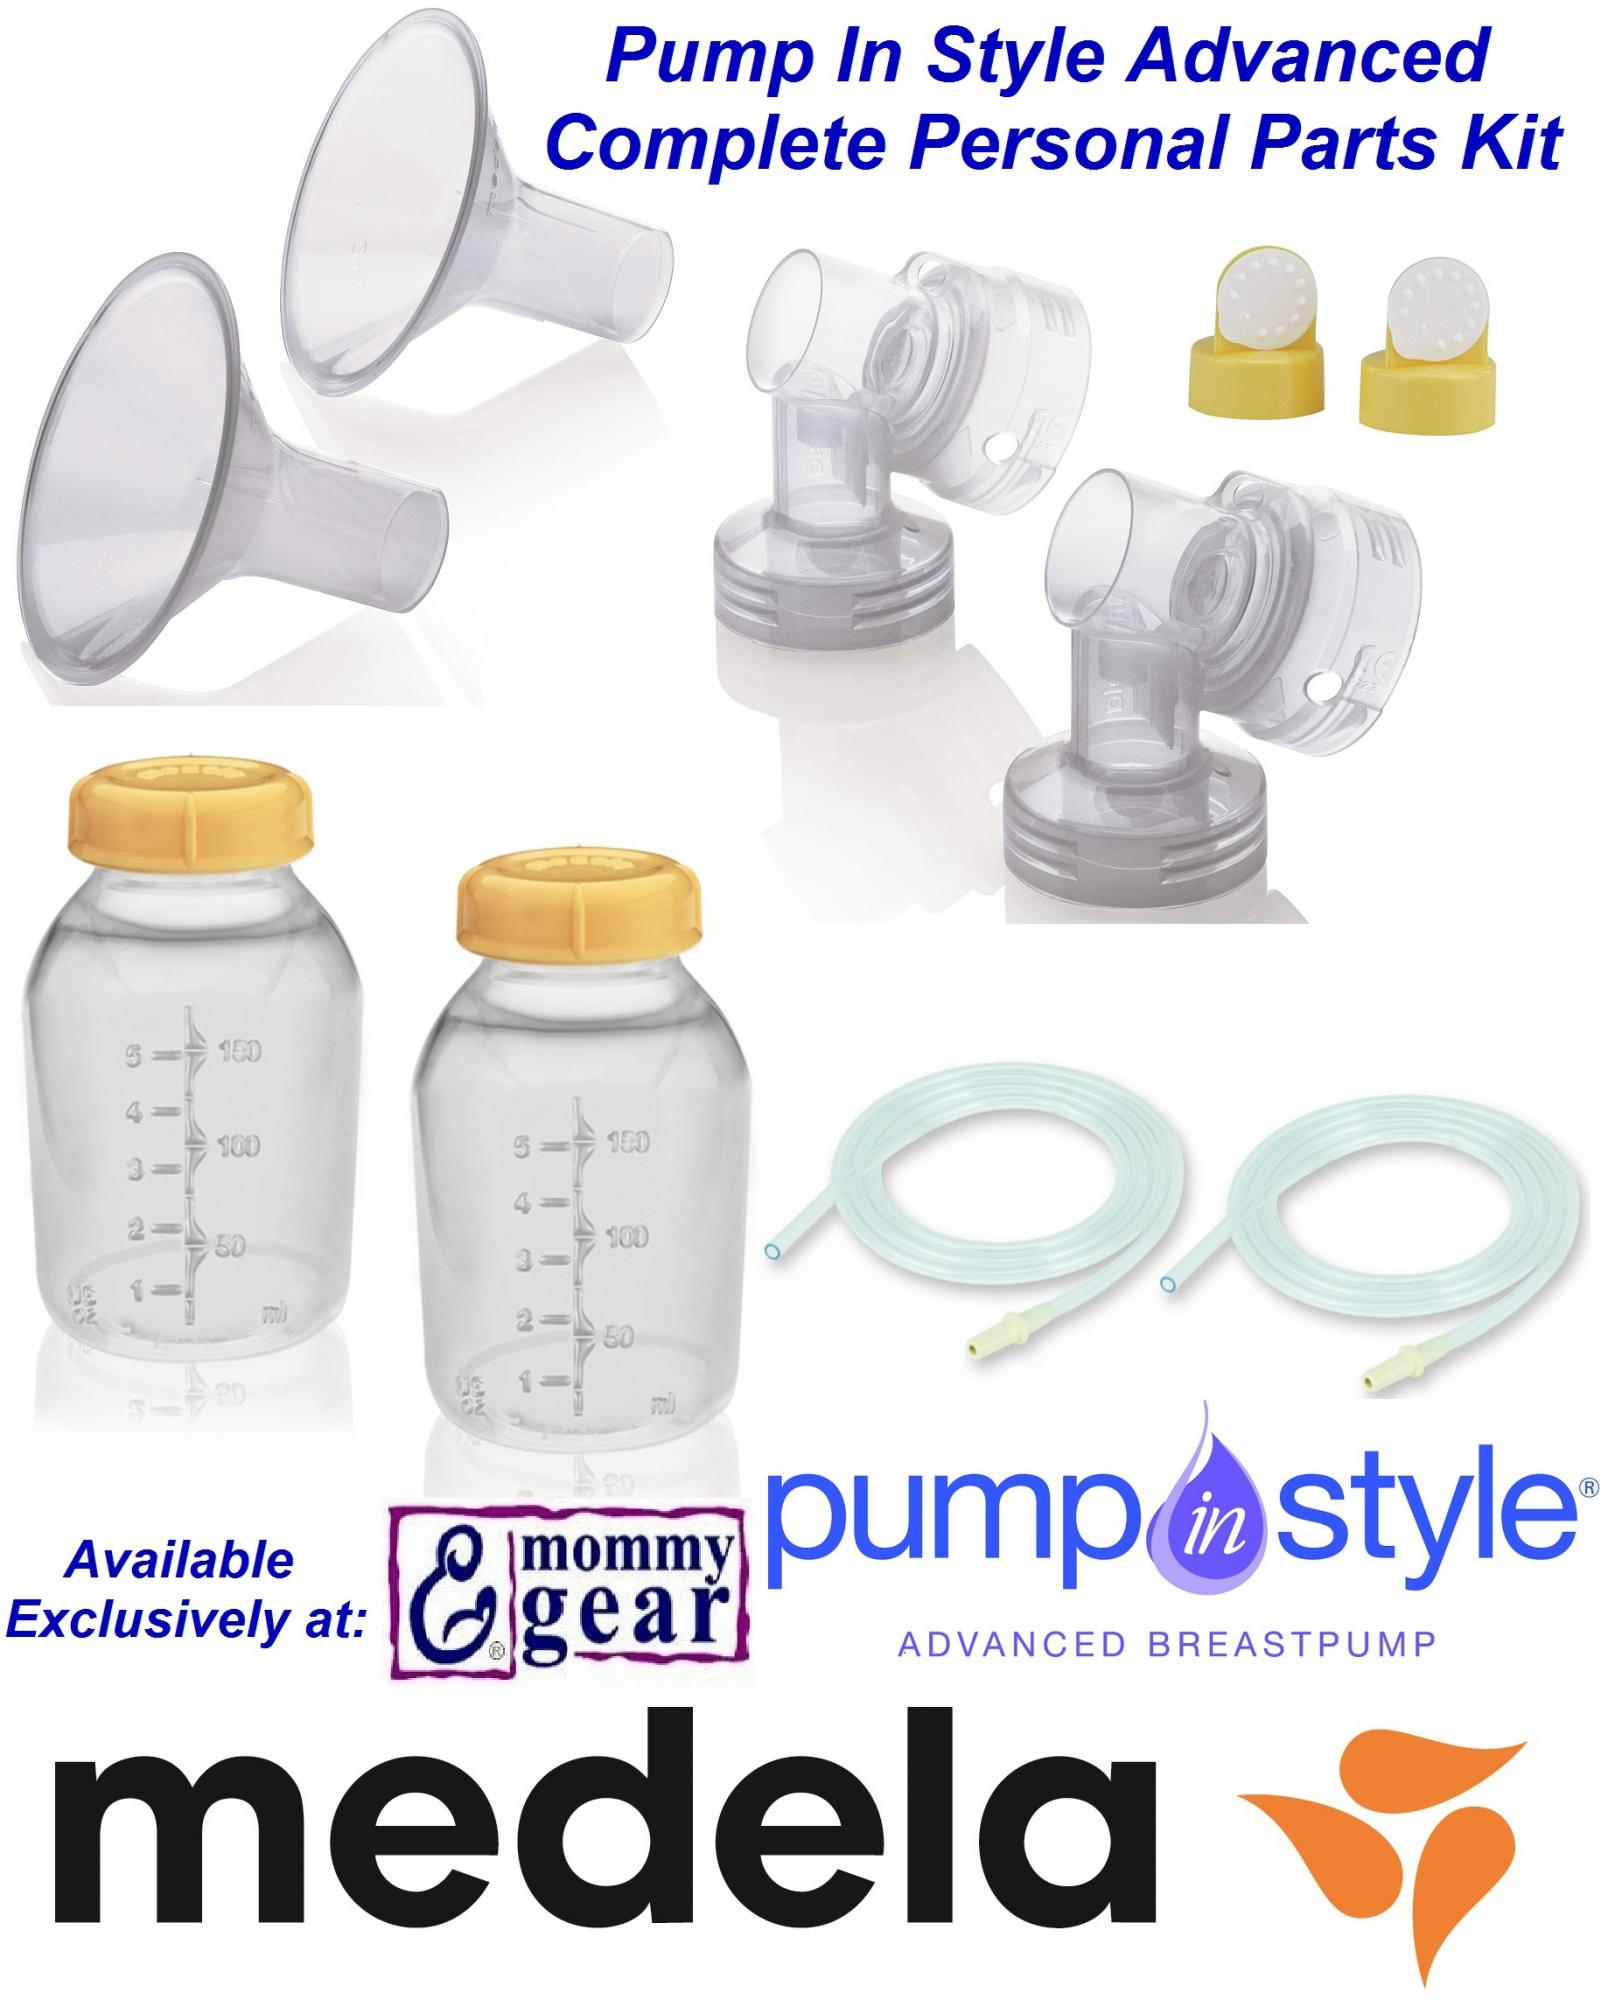 Medela Breast pump Accessory Set 